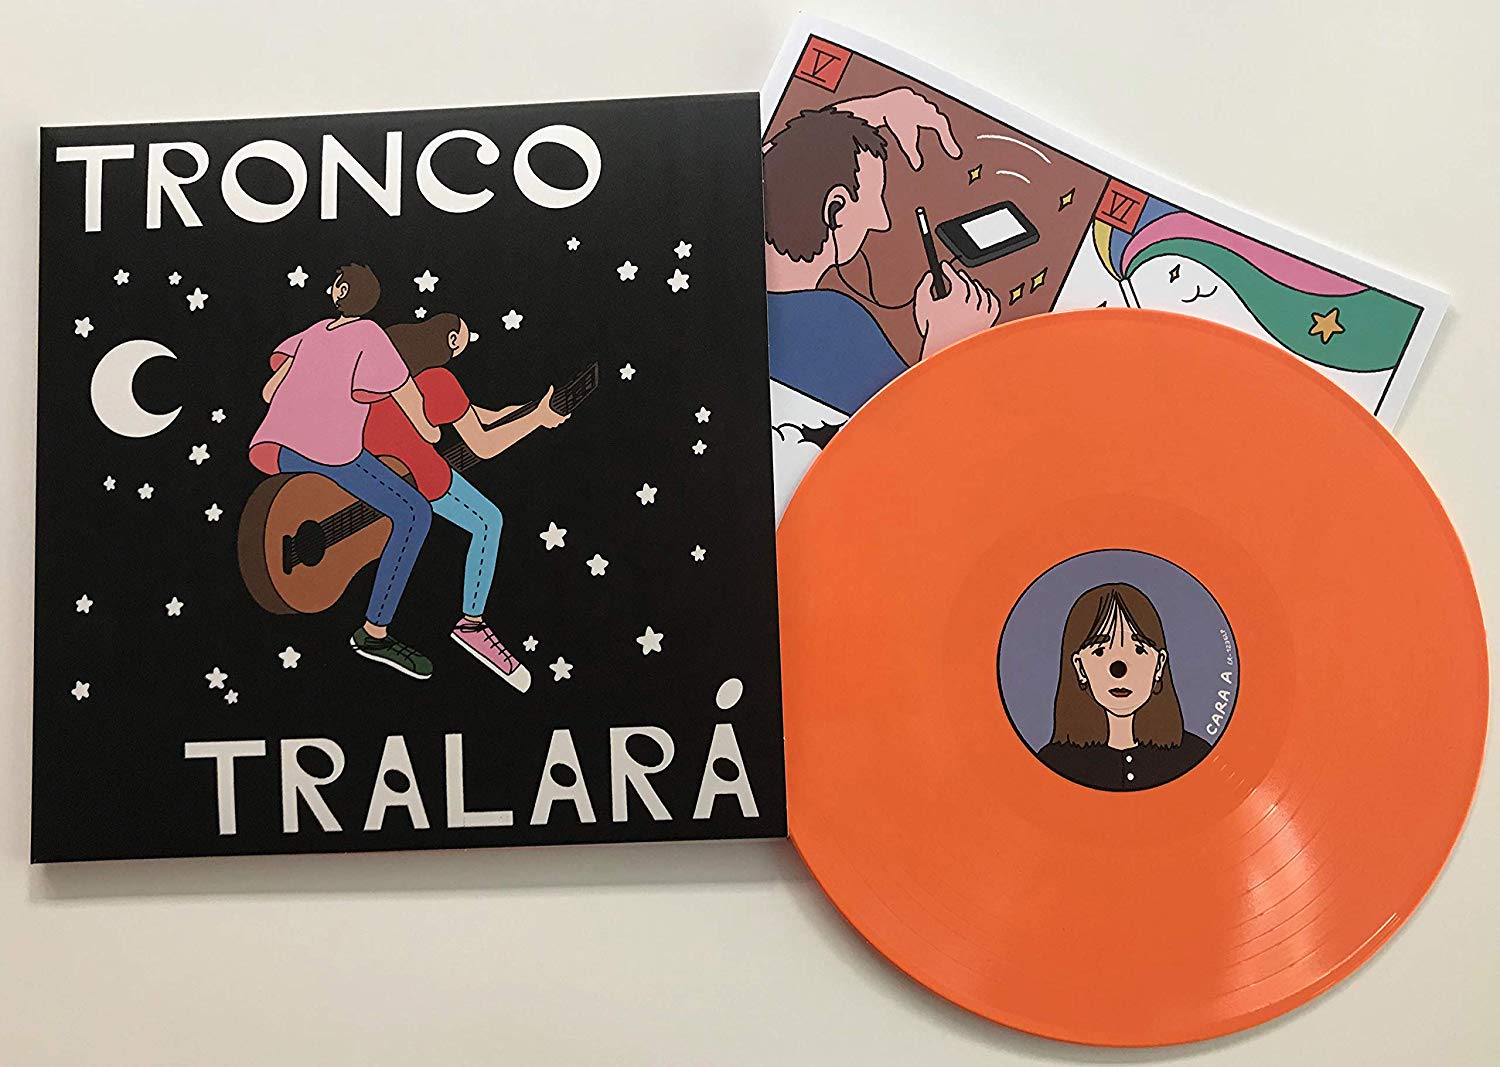 Tronco - Tralara vinyl cover